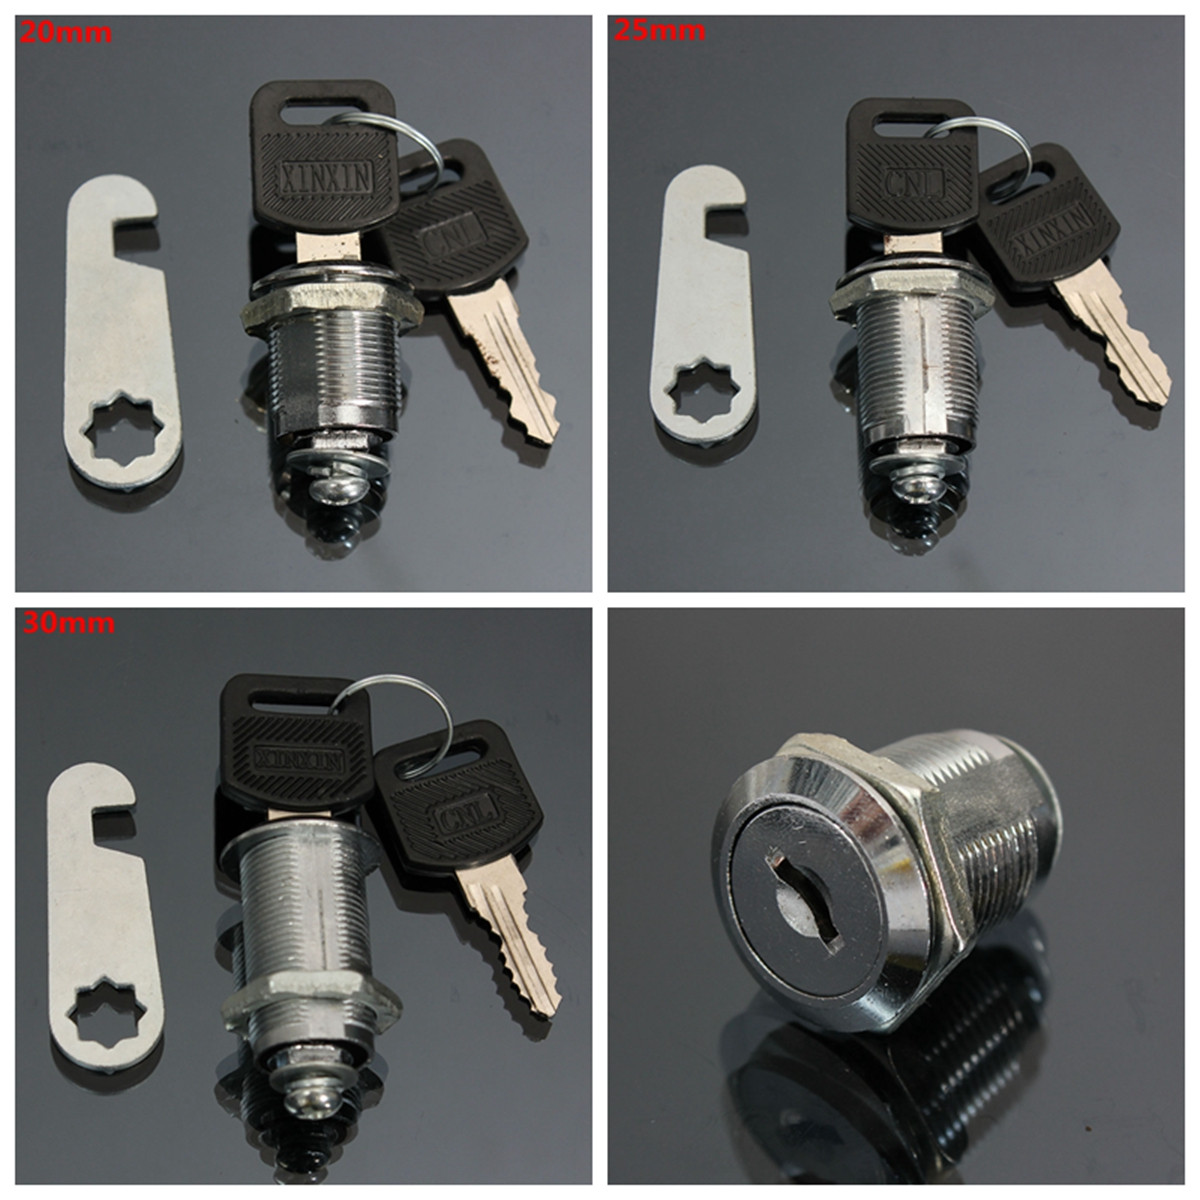 

20/25/30mm Cam Lock For Cabinet Toolbox Drawer Enclosure Cupboard Locker with 2 Keys